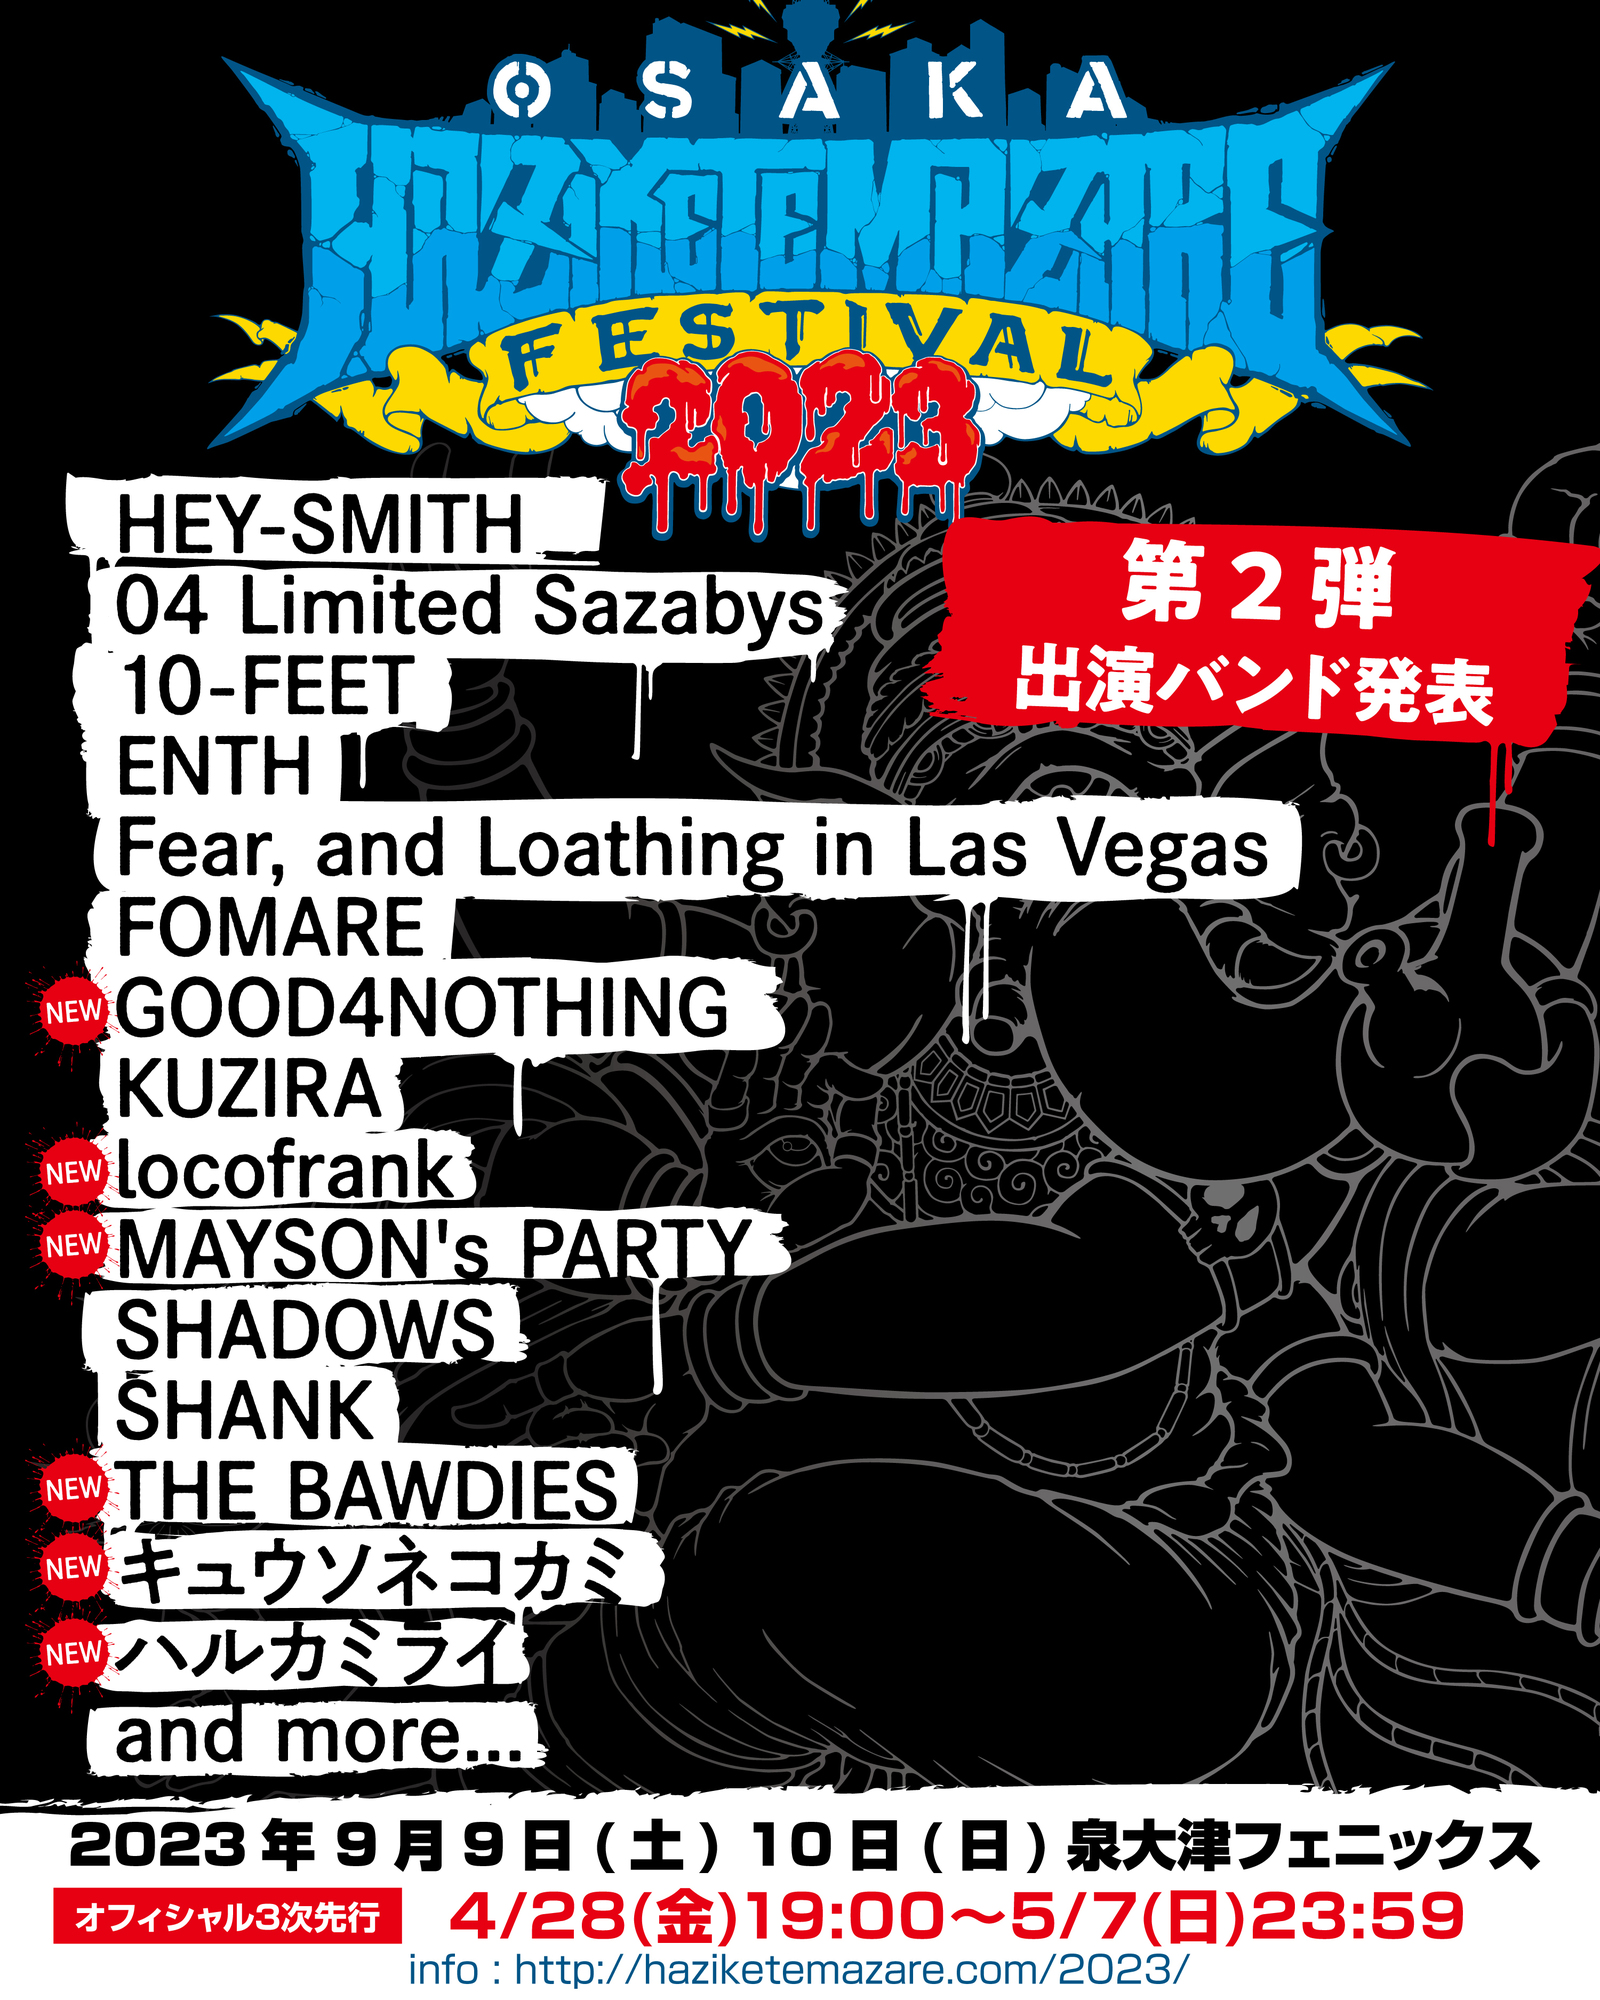 「HEY-SMITH Presents OSAKA HAZIKETEMAZARE FESTIVAL 2023」への出演が決定！